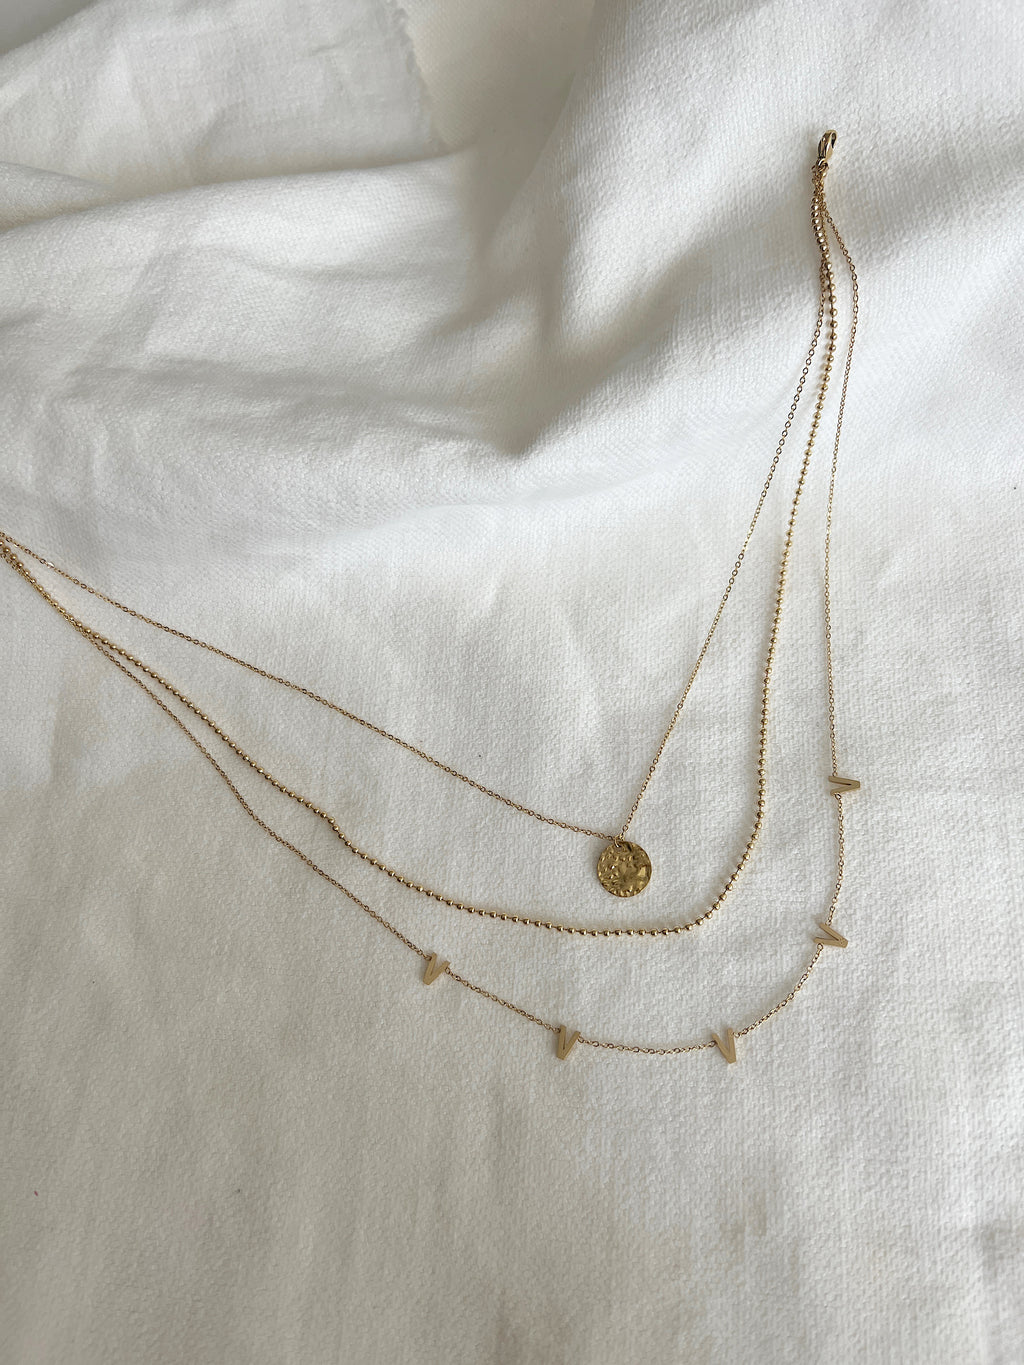 Arthus necklace - Golden